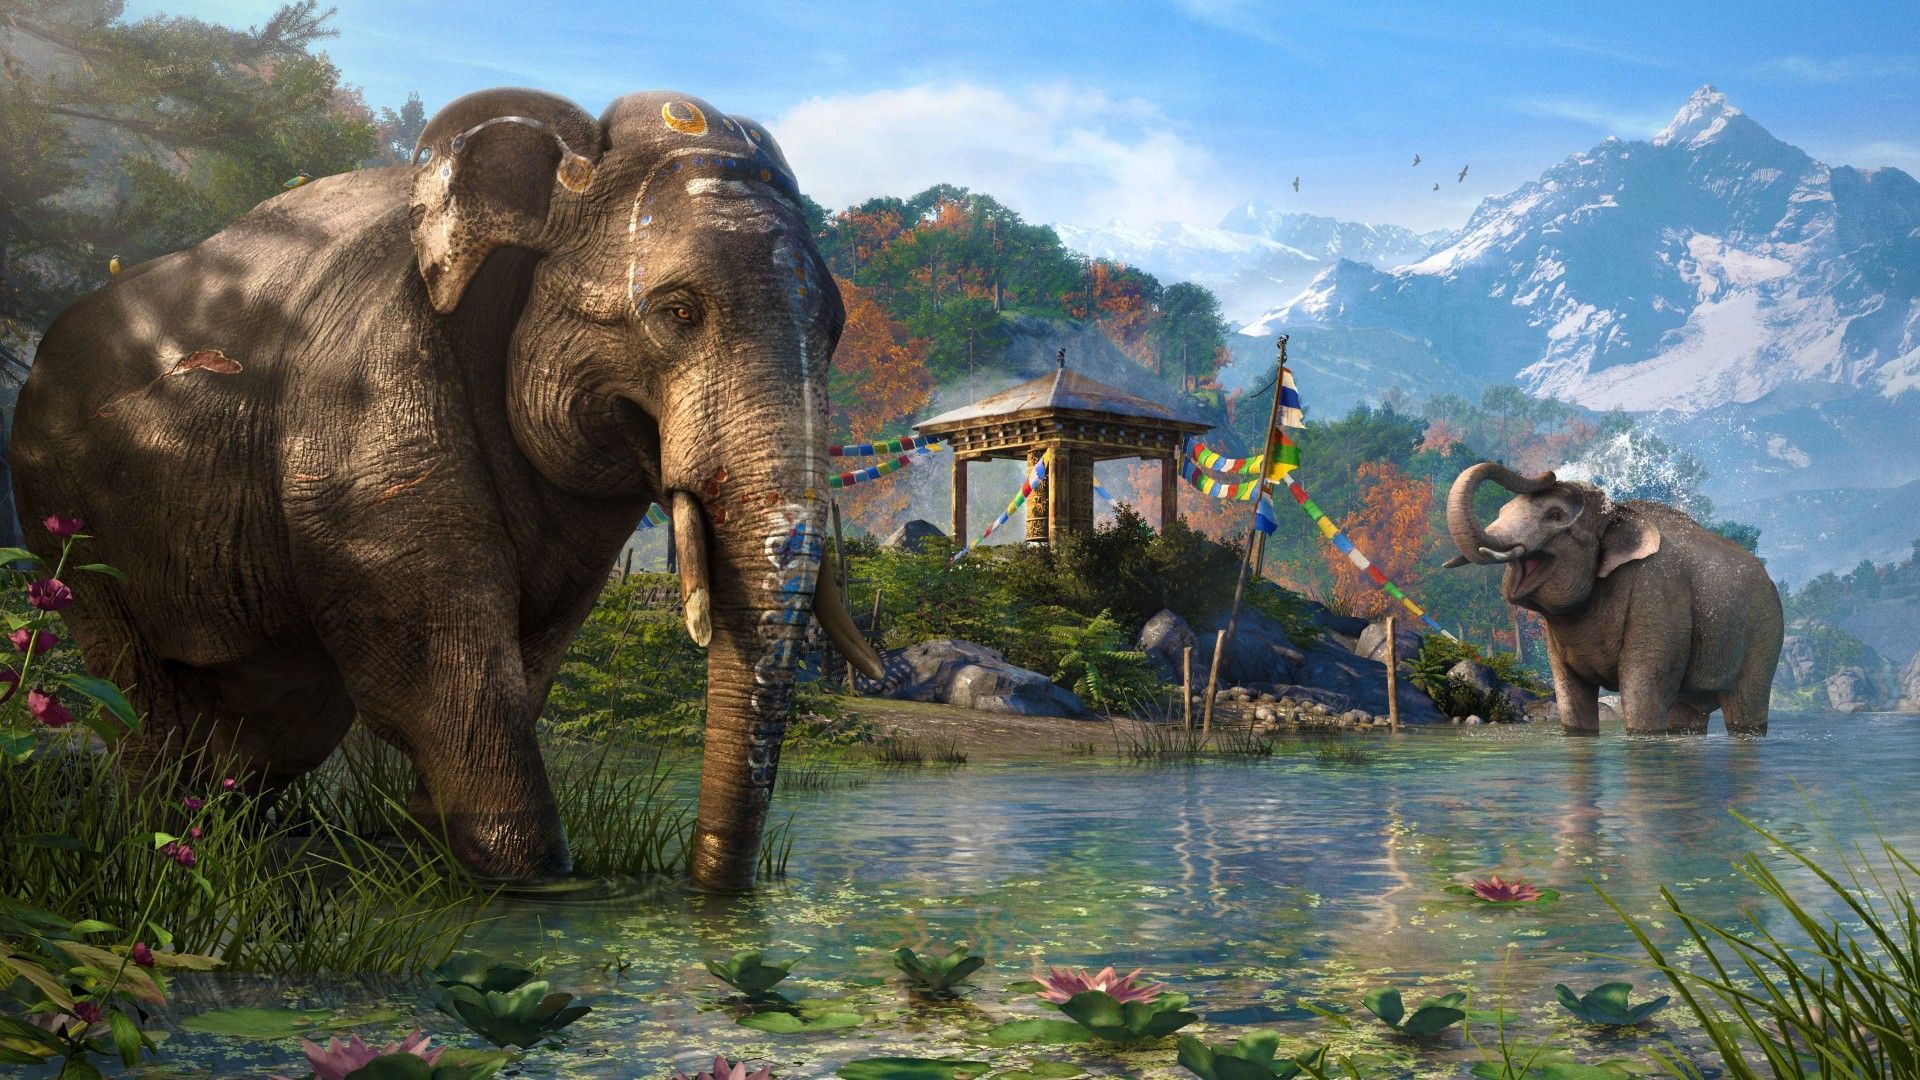 Far Cry 4 5760x Games: Far Cry game, open world, Adventure games, shooter, Kyrat, elephant, Himalayas, Tibet, lak. Far cry Adventure games, Primal game